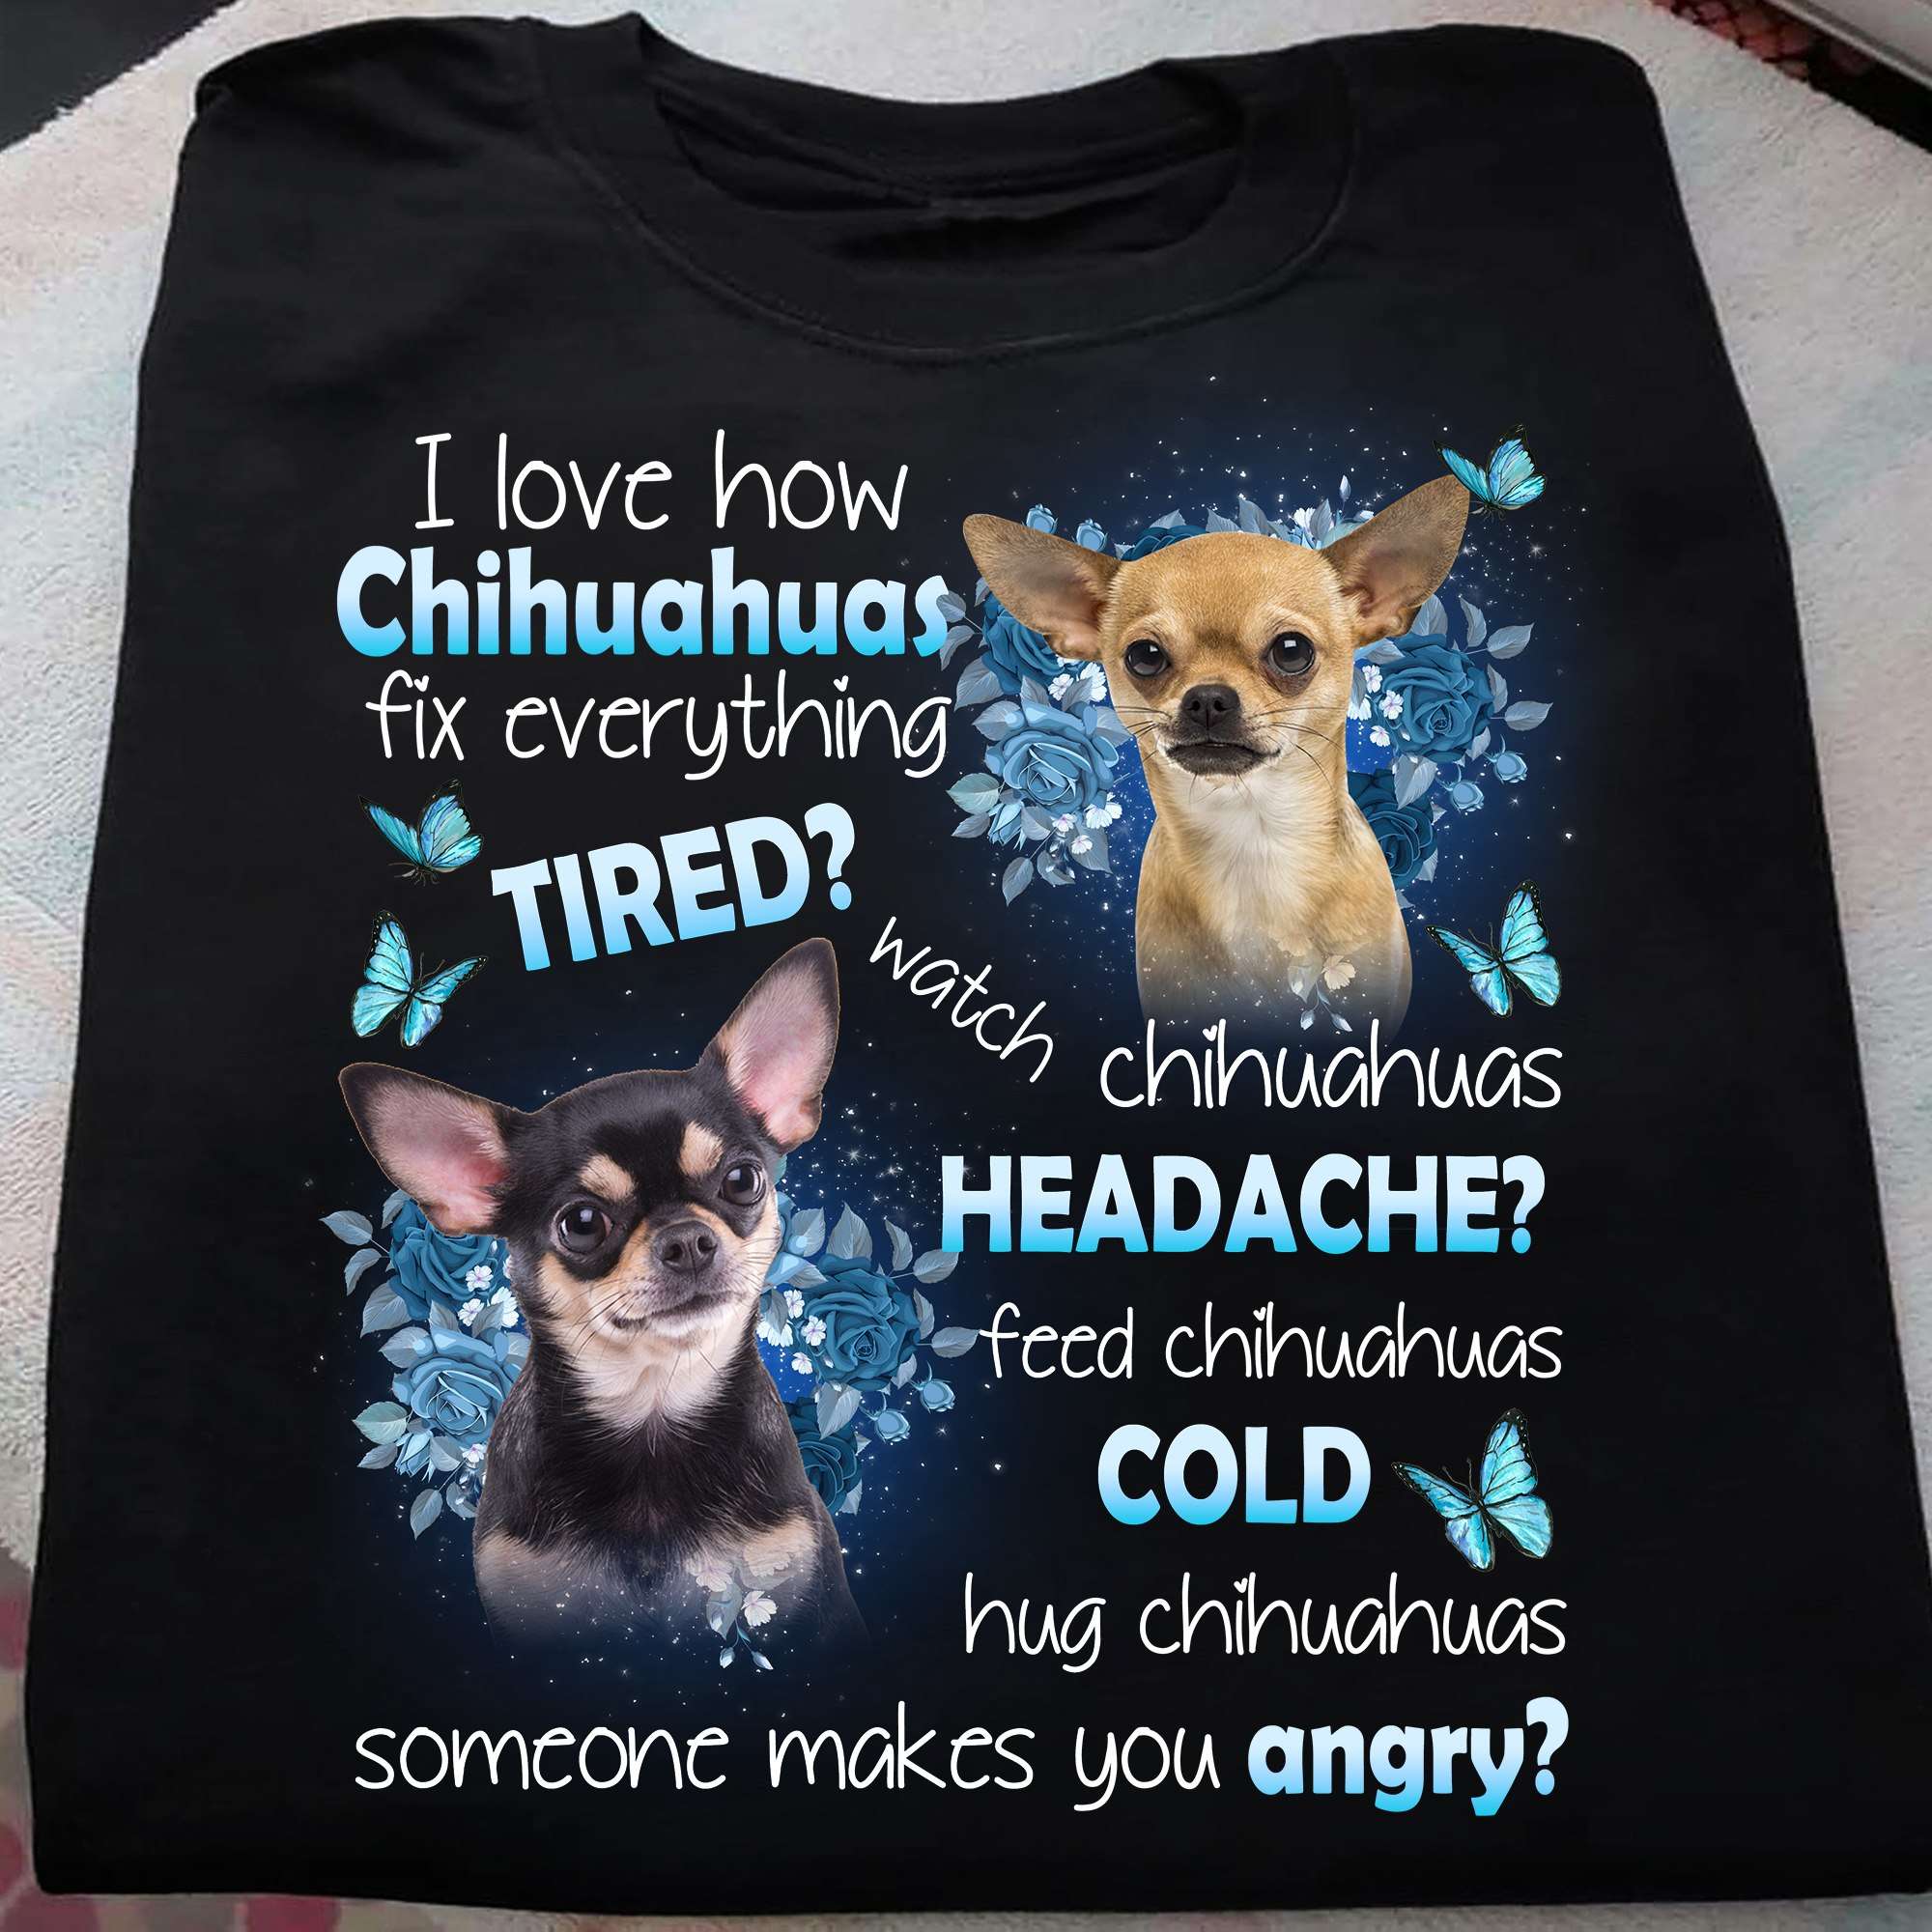 I love chihuahua fix everything tired? watch chihuahua headache? - Chihuahua Lover